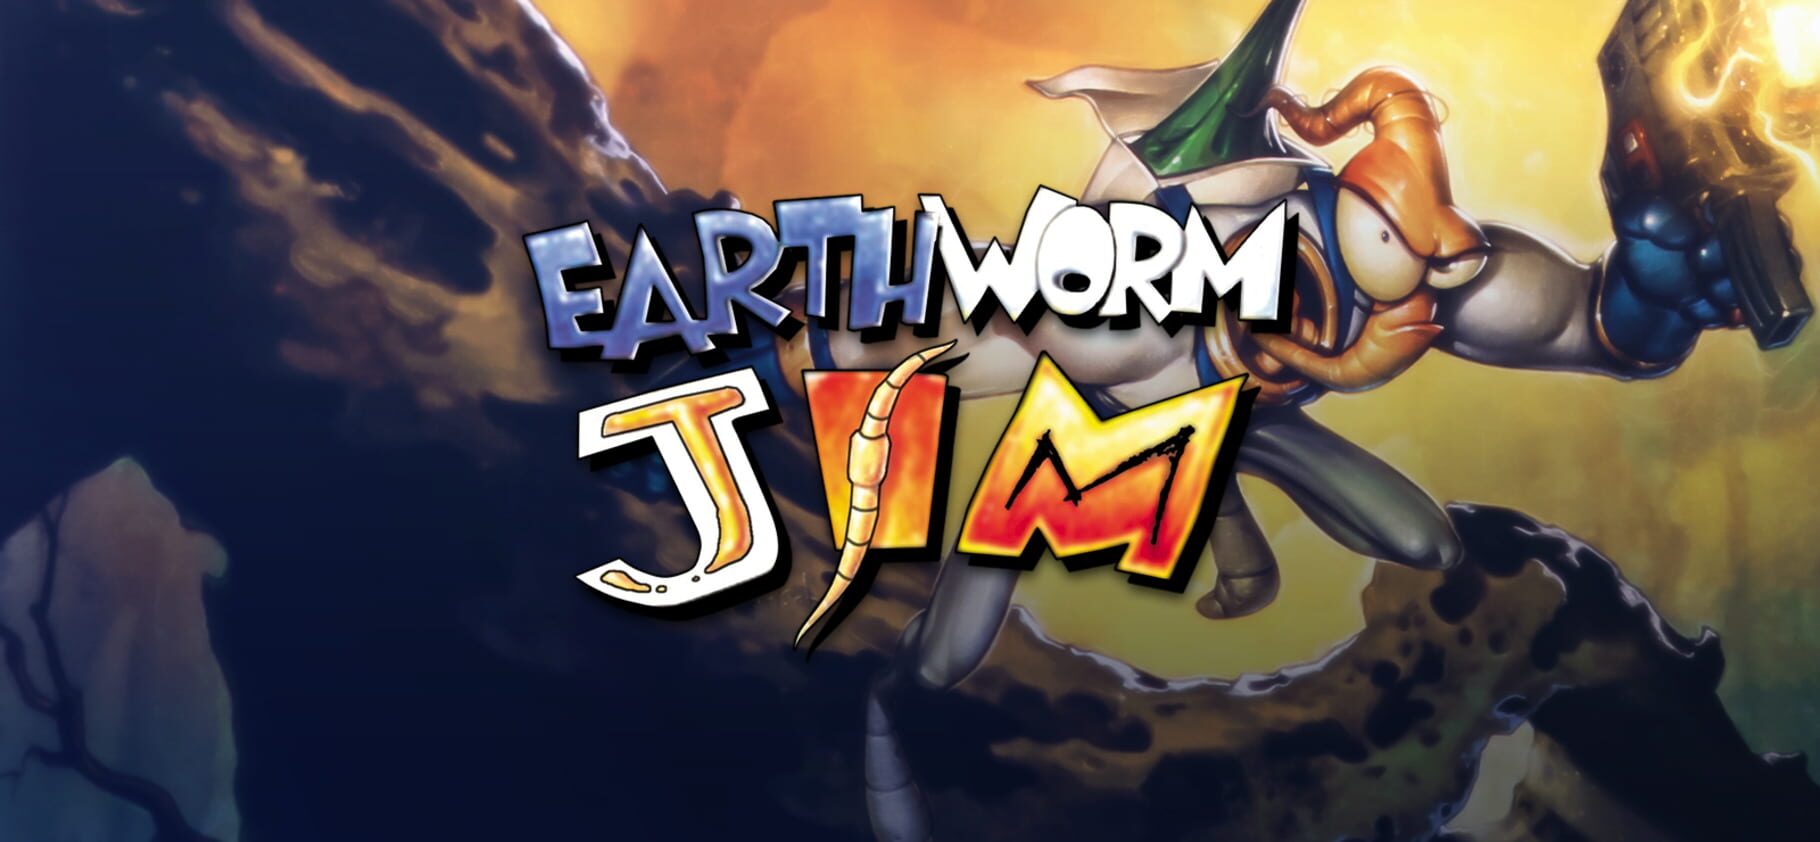 Arte - Earthworm Jim